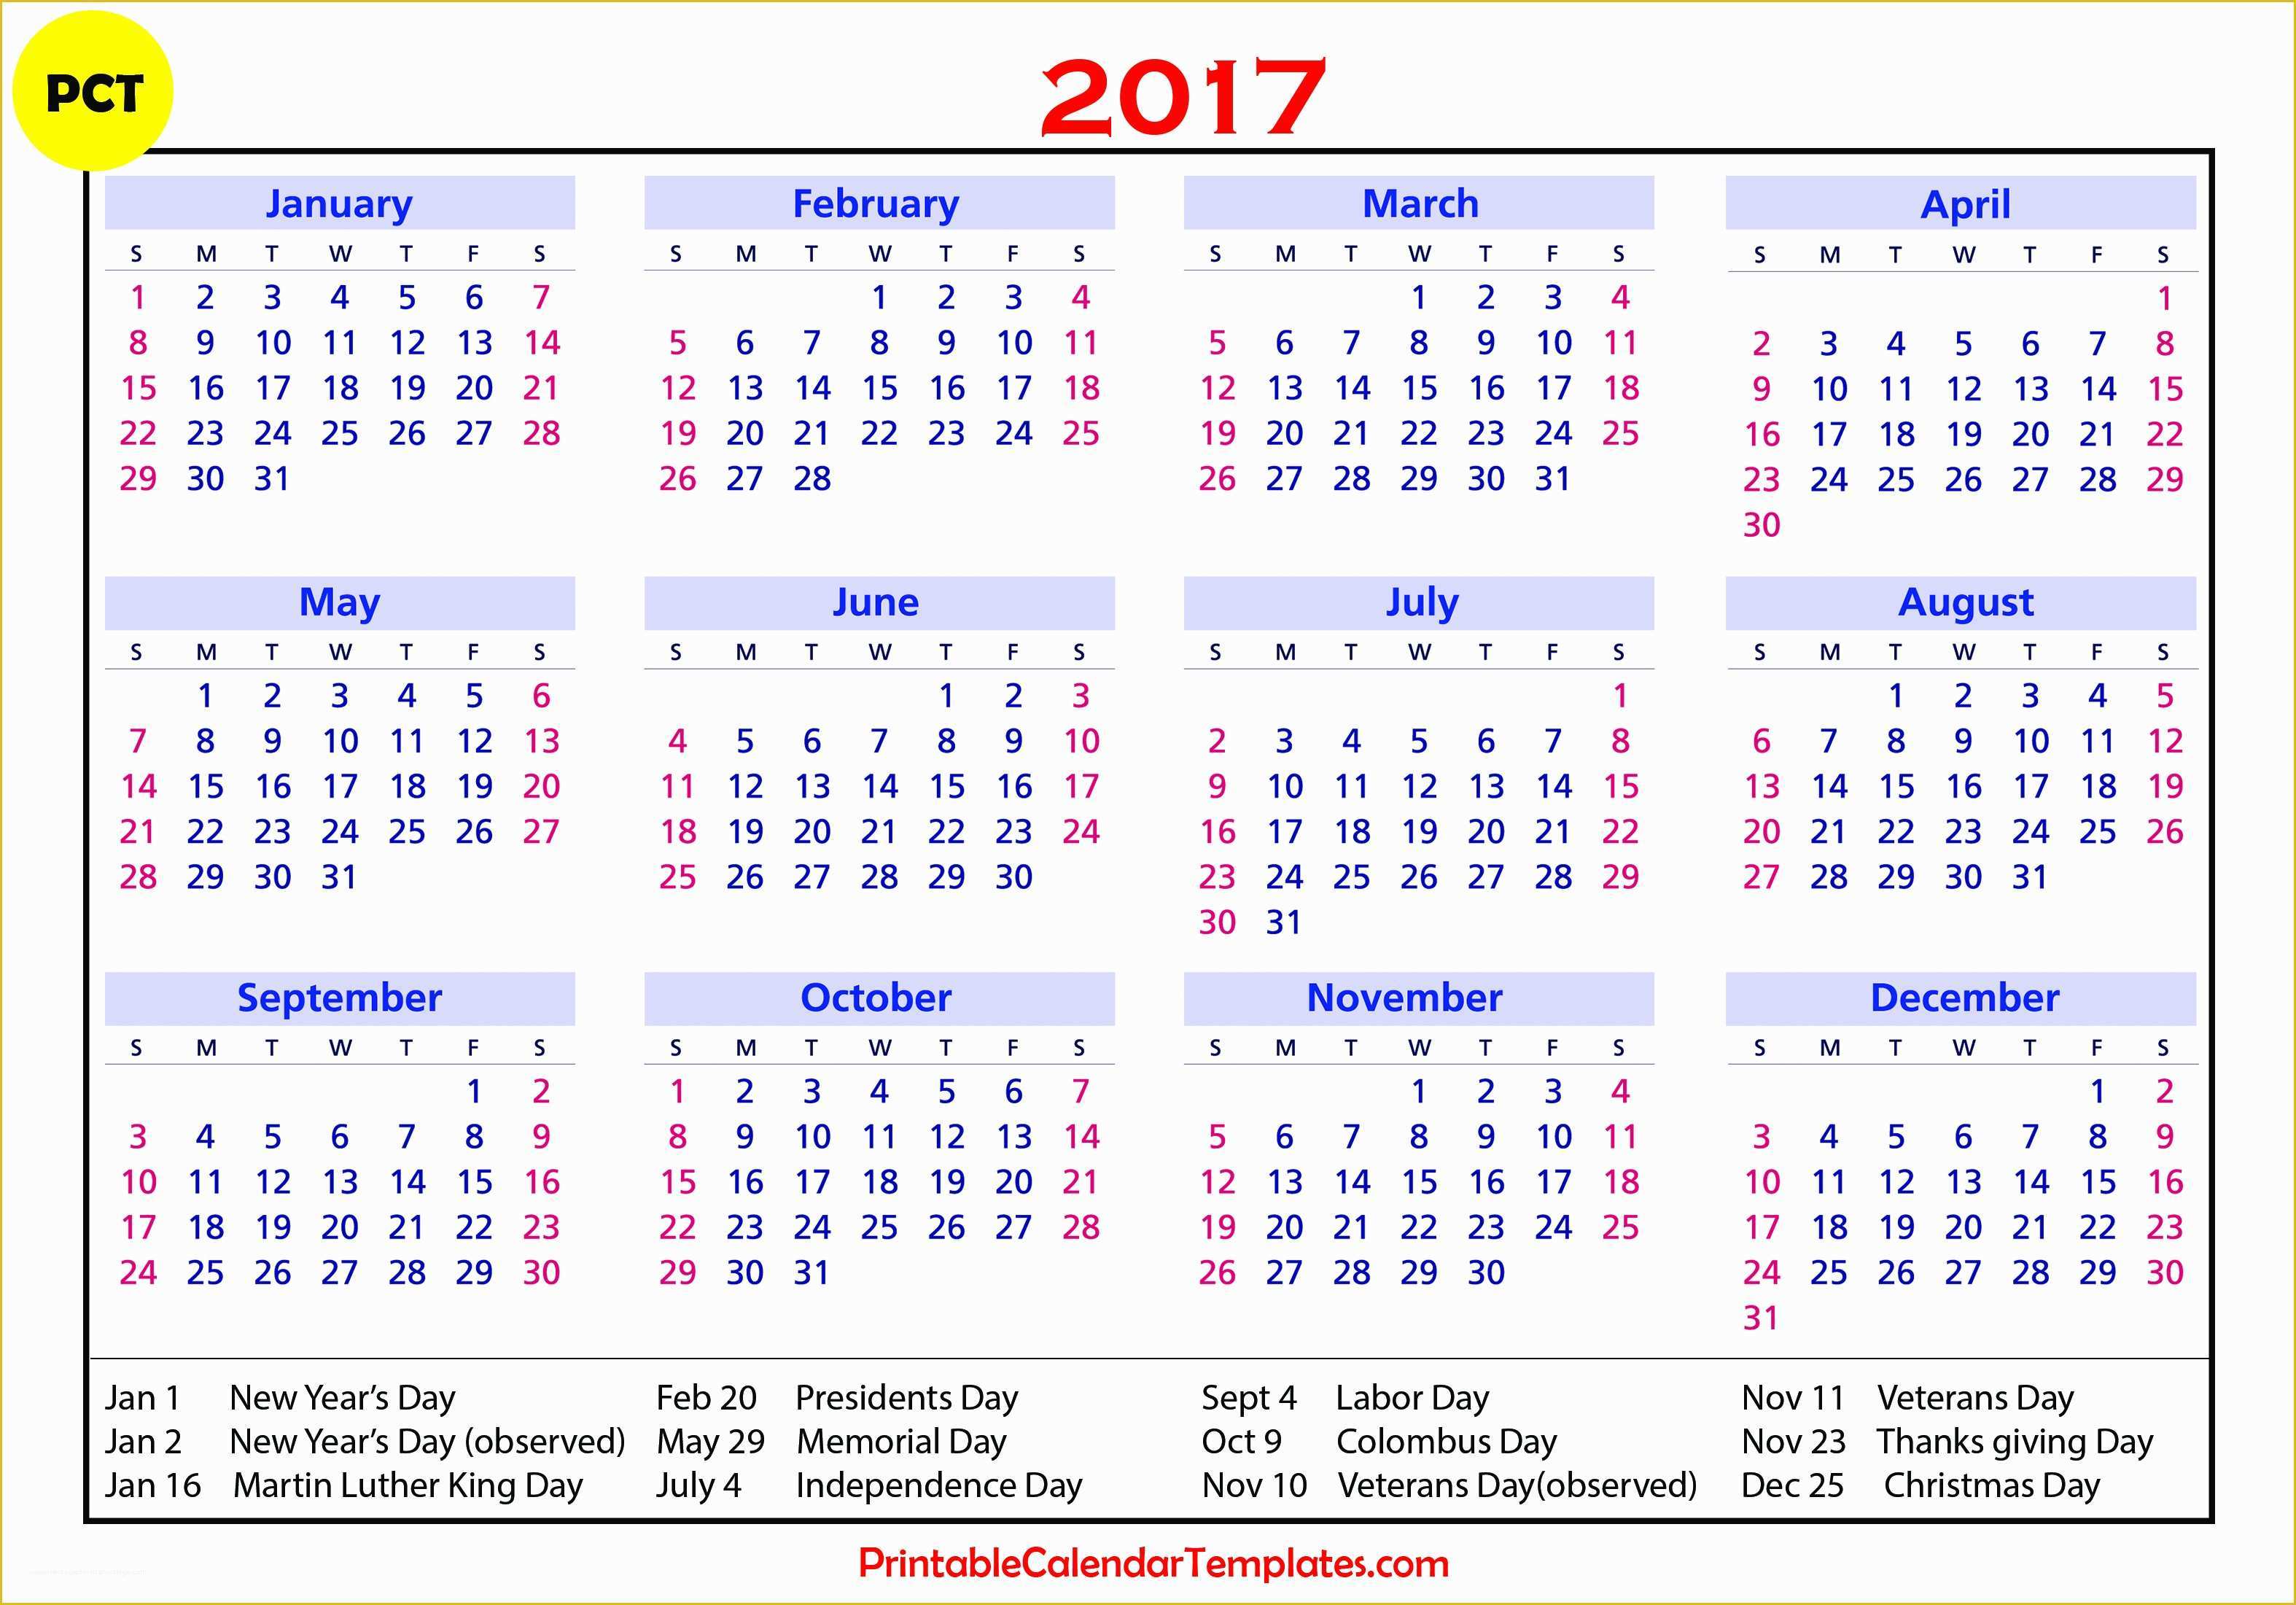 Free Photo Calendar Template 2017 Of 2017 Calendar with Holidays